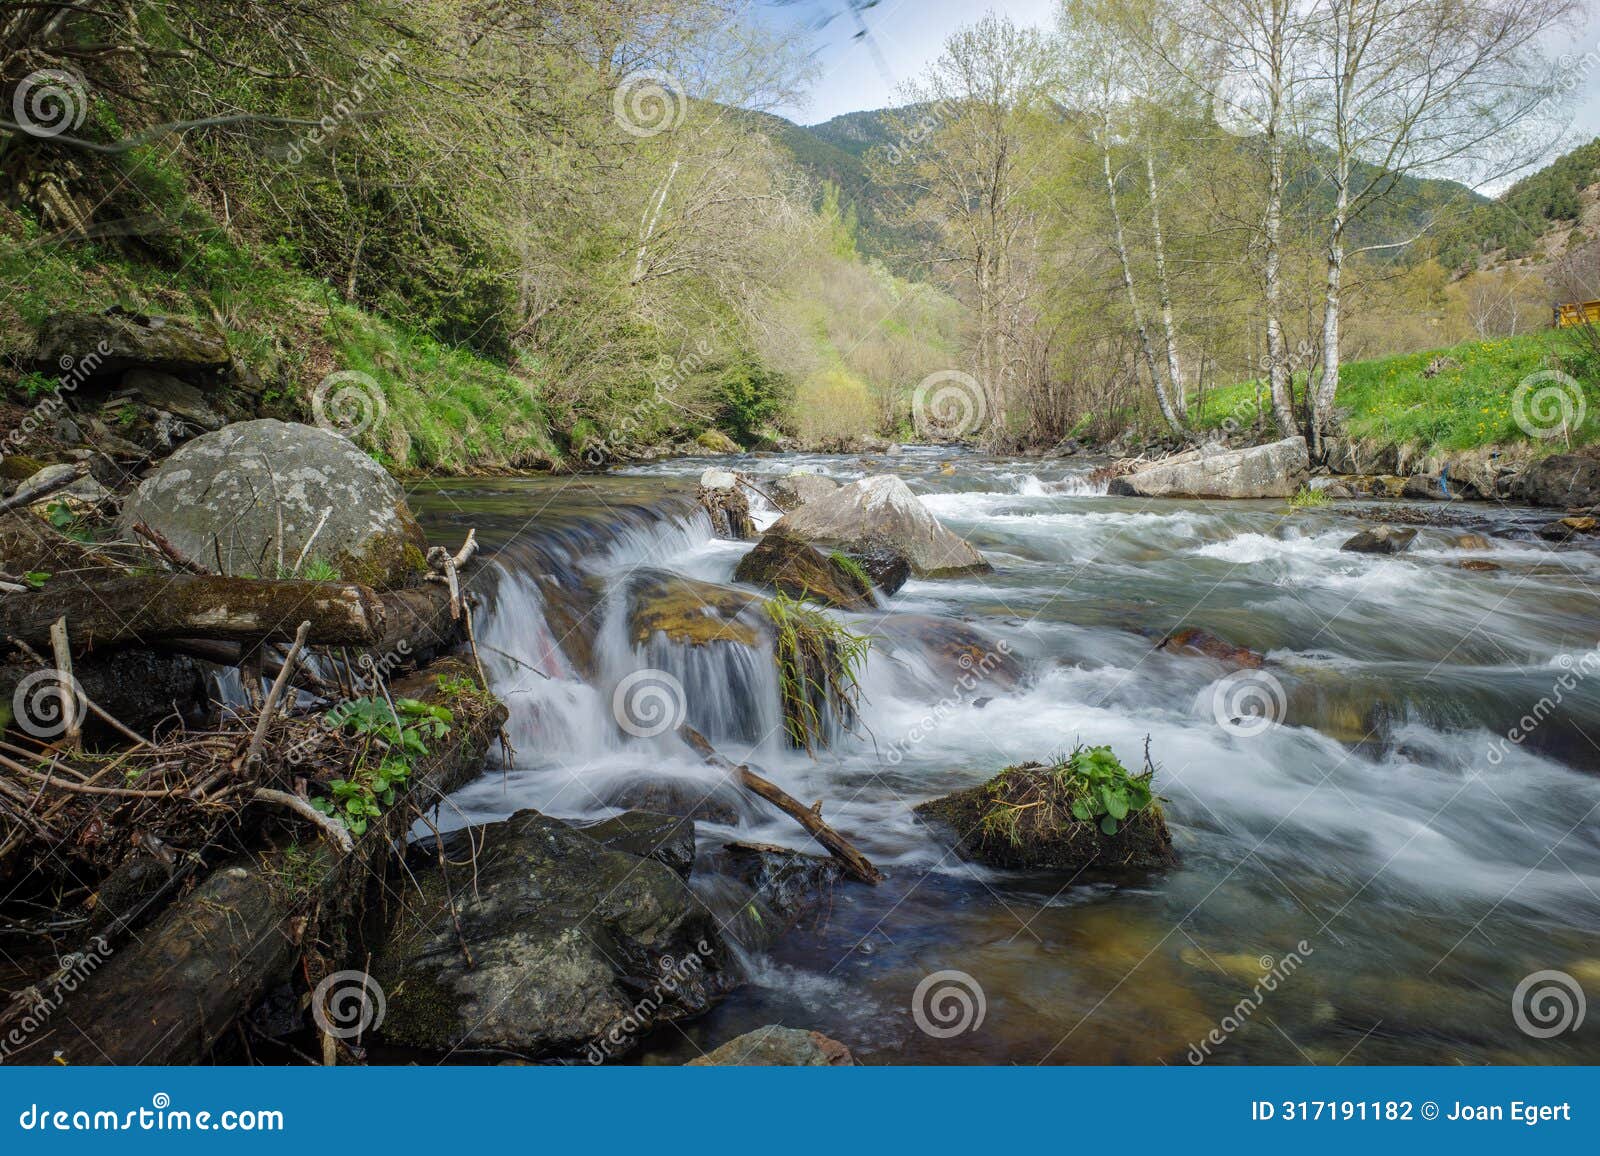 the valira river of andorra